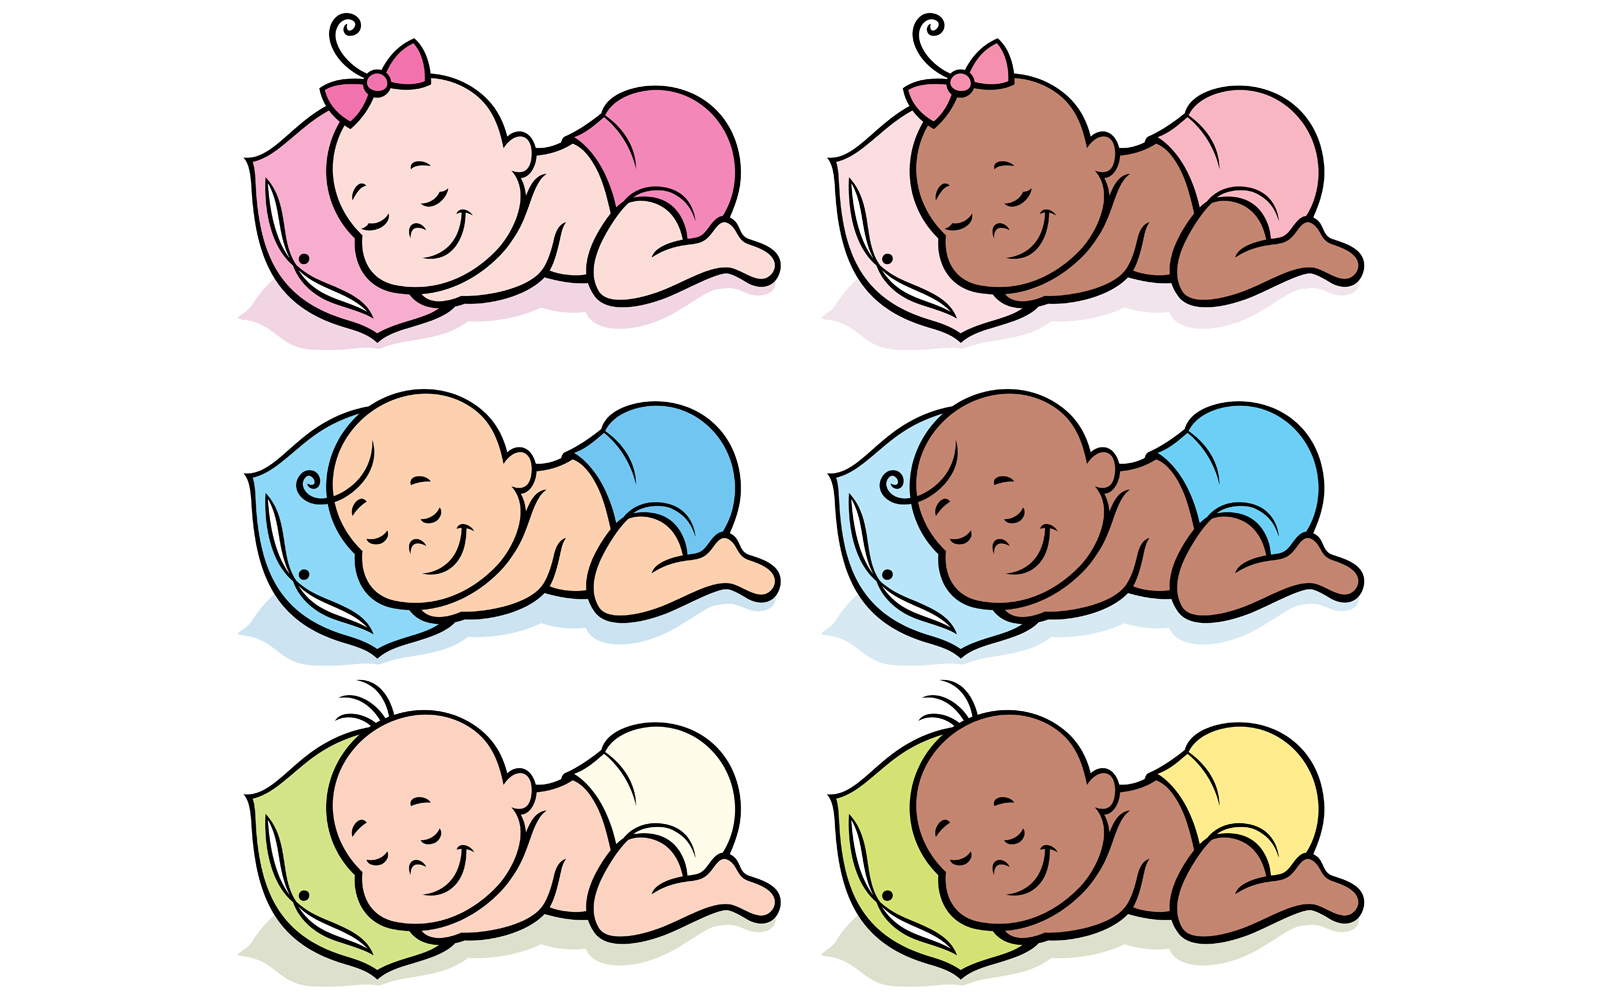 Sleeping Babies in Diapers - Illustration